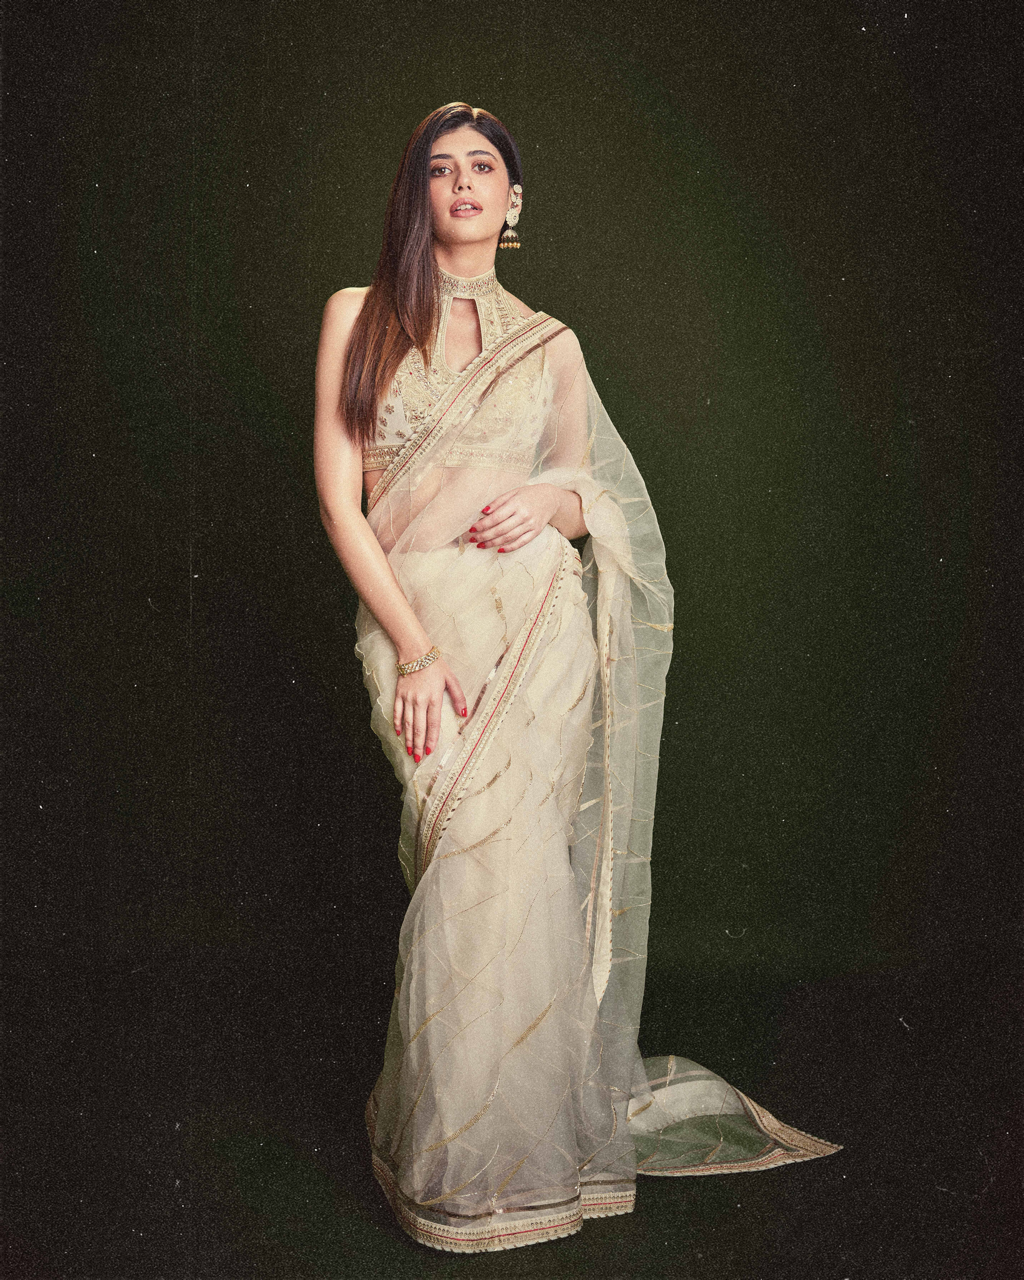 Sanjana Sanghi in  Golconda Priyal saree set